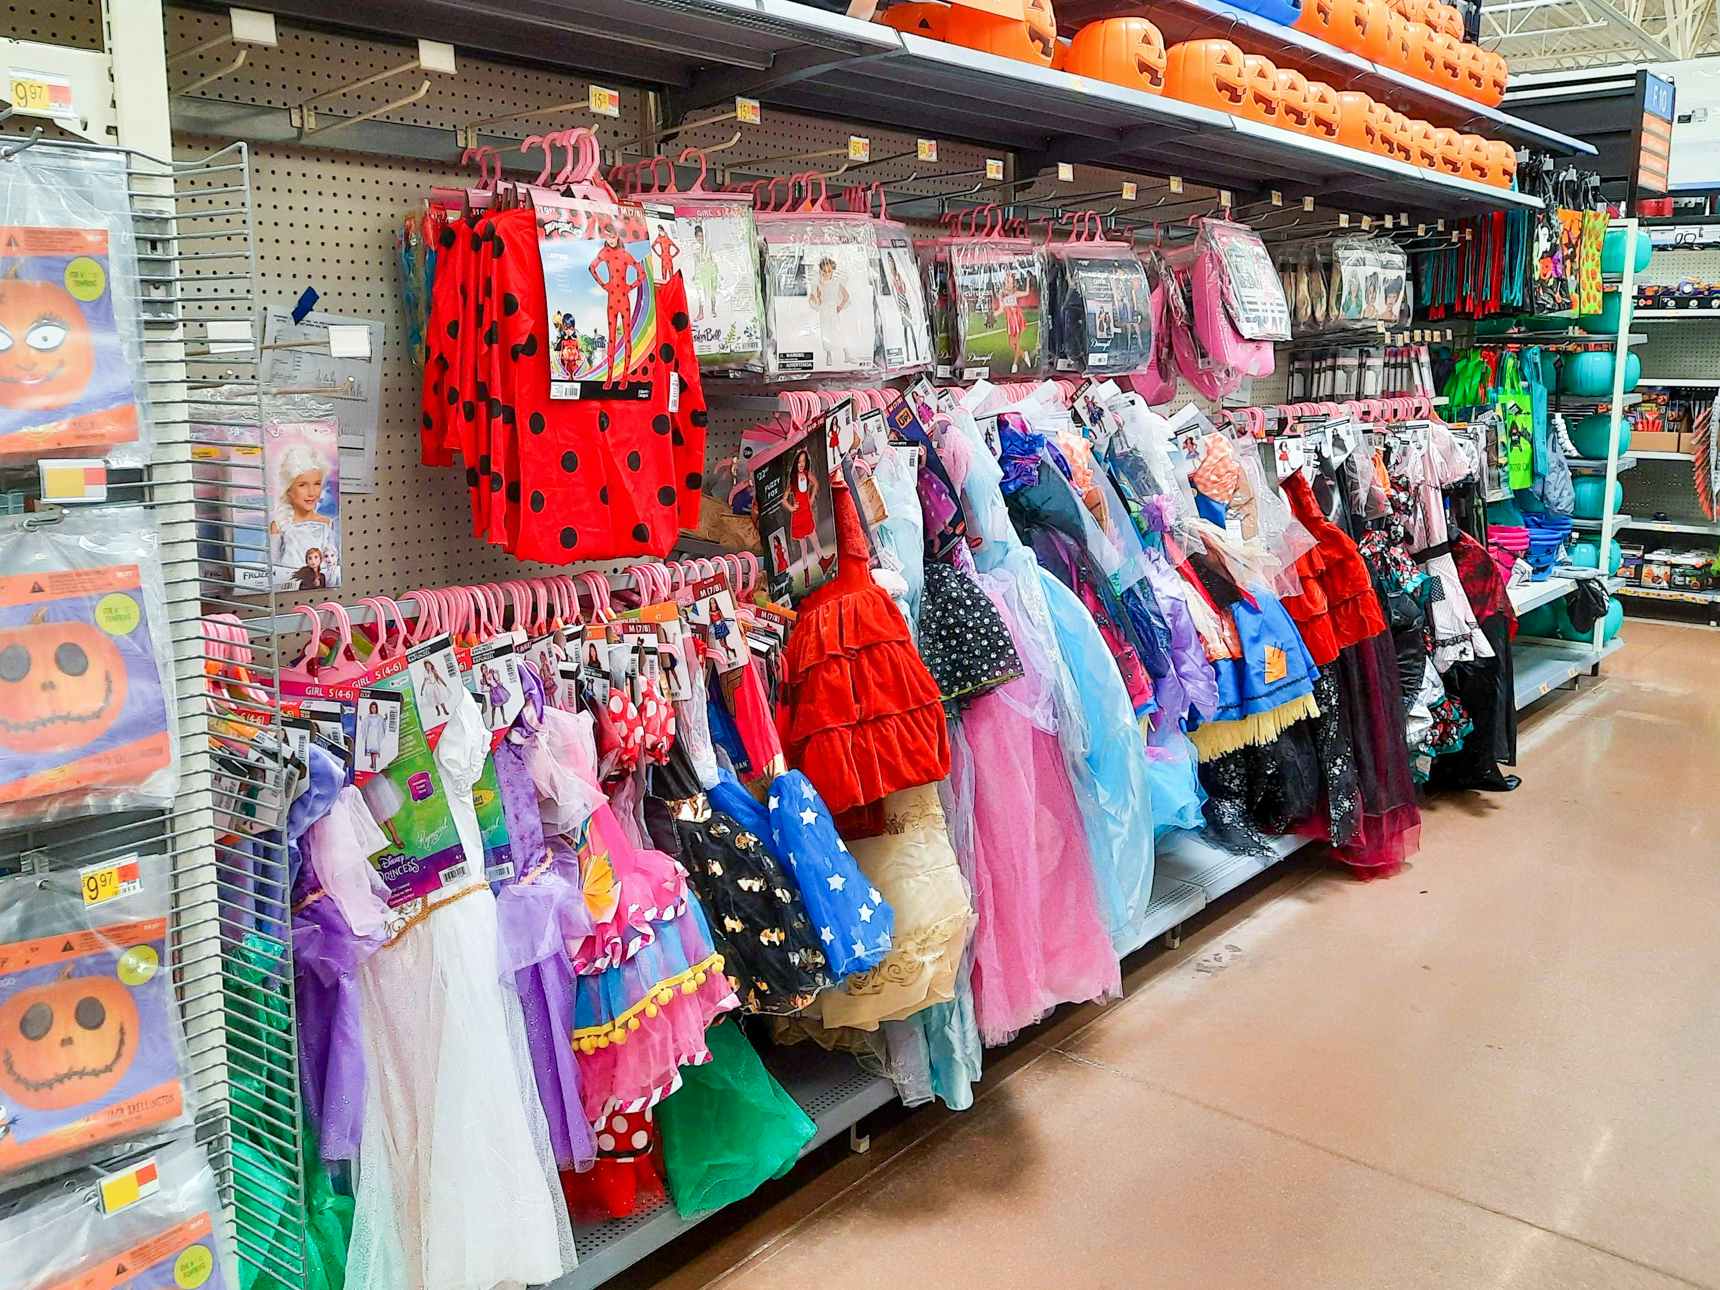 Halloween costumes on display at Walmart